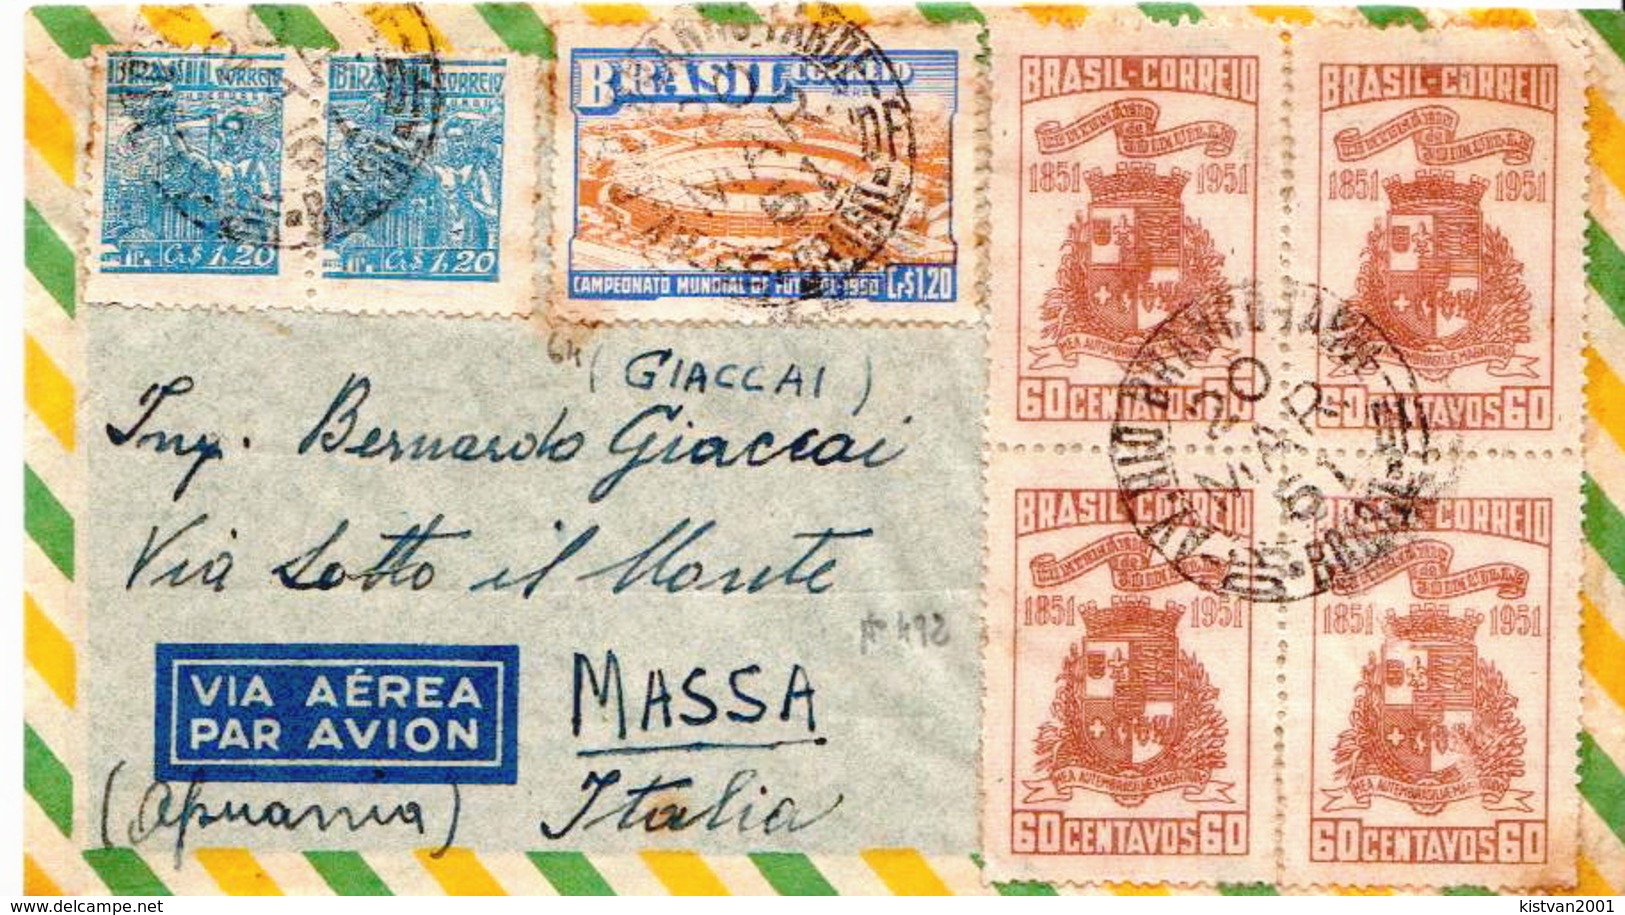 Postal History Cover: Brazil Stamps On Cover - 1950 – Brazil